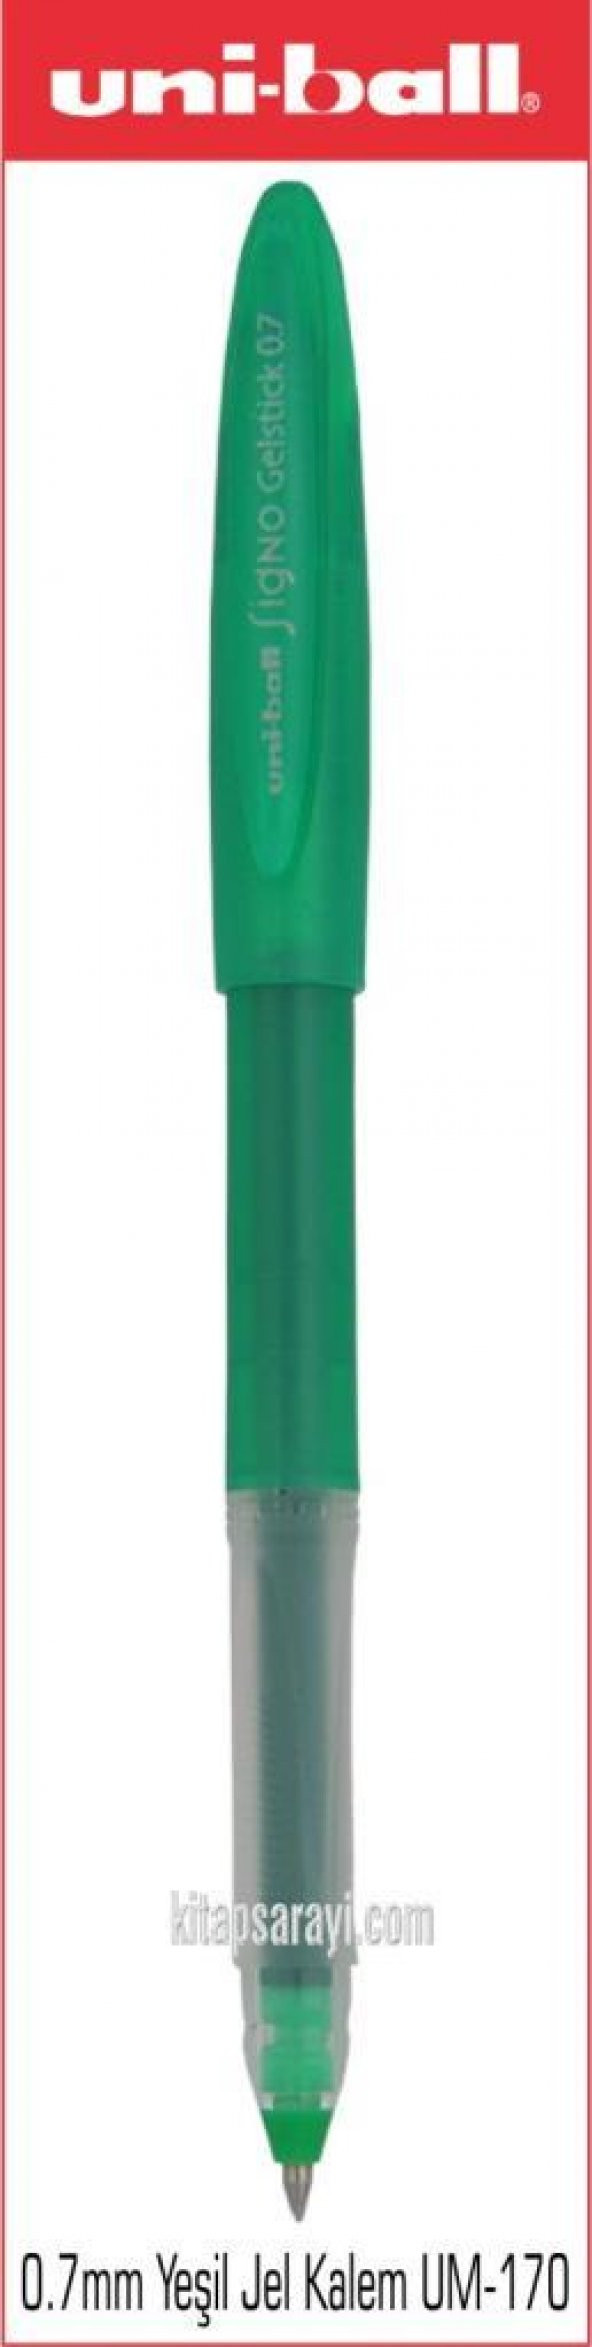 Uniball Signo GELSTICK 0.7 mm Yeşil Jel Kalem UM-170